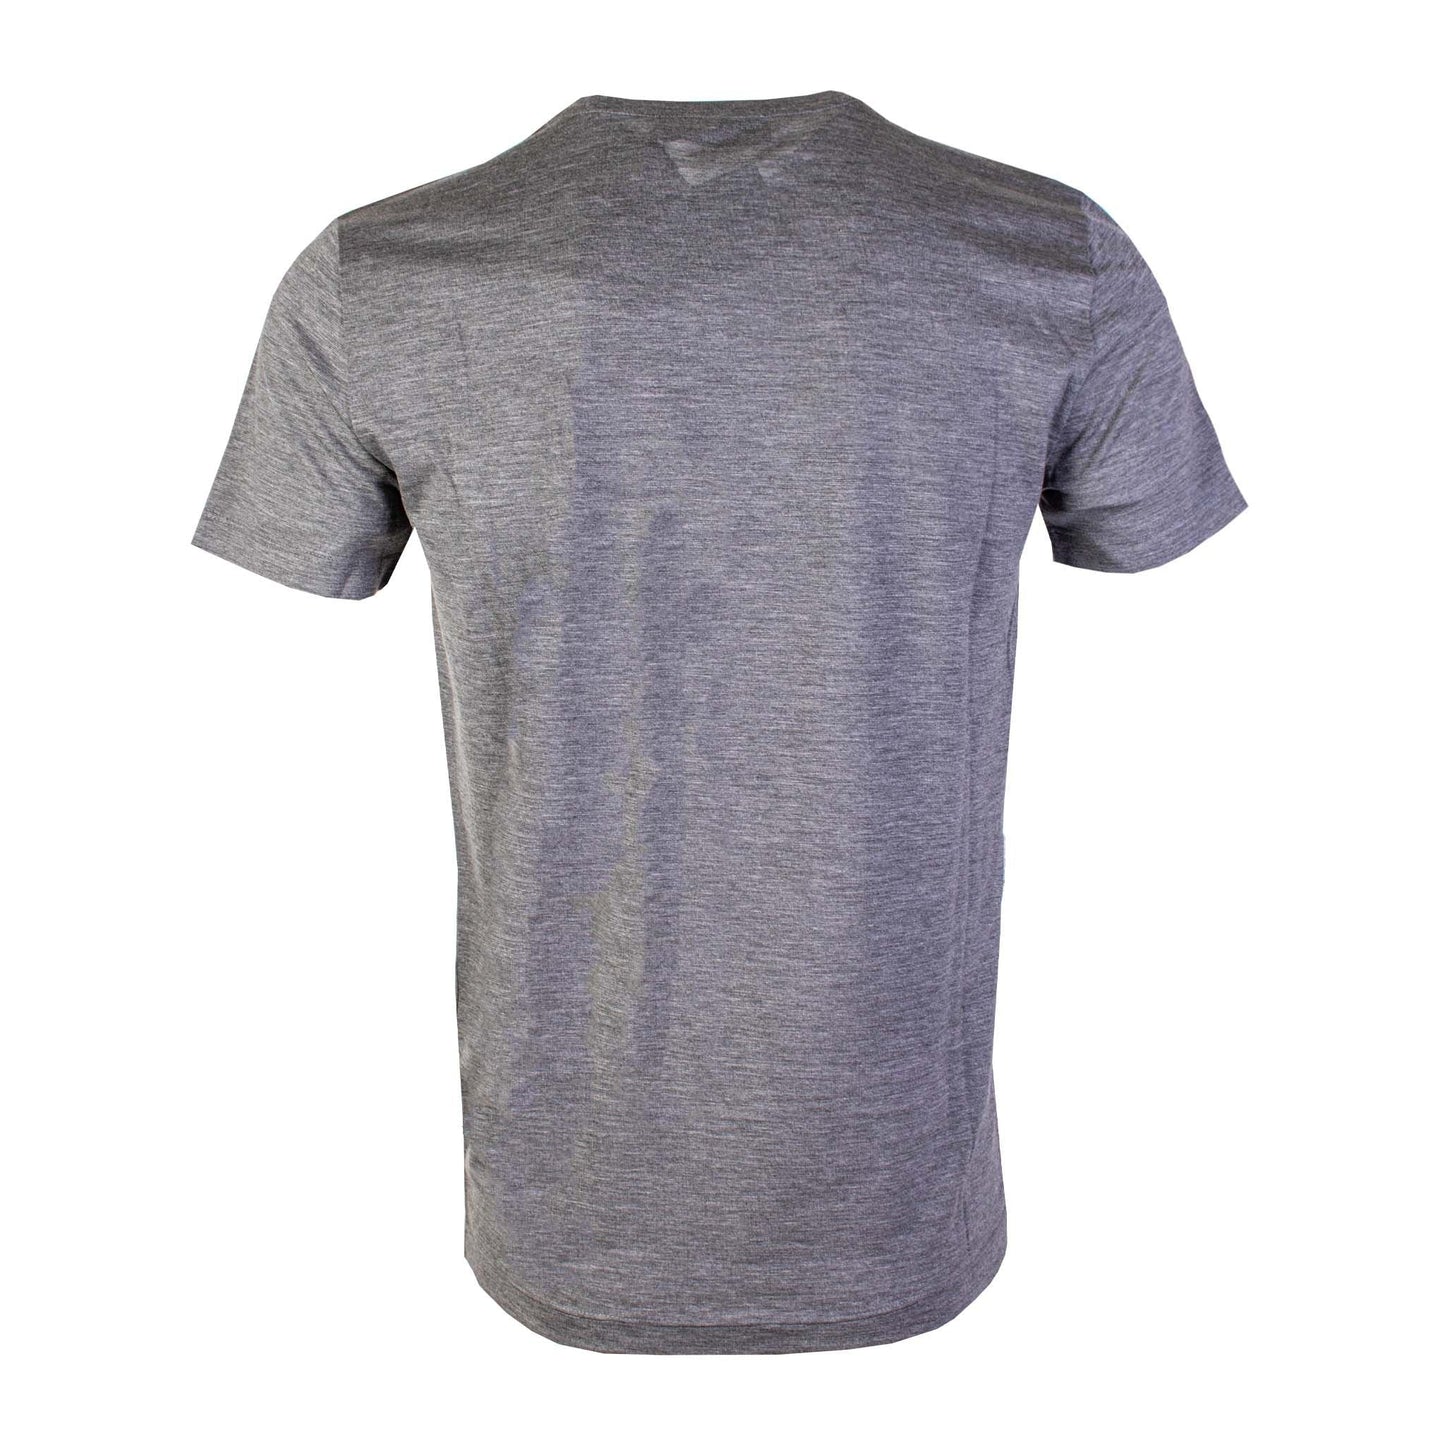 Fashionsarah.com Fashionsarah.com Lardini Blended Wool Grey T-Shirt